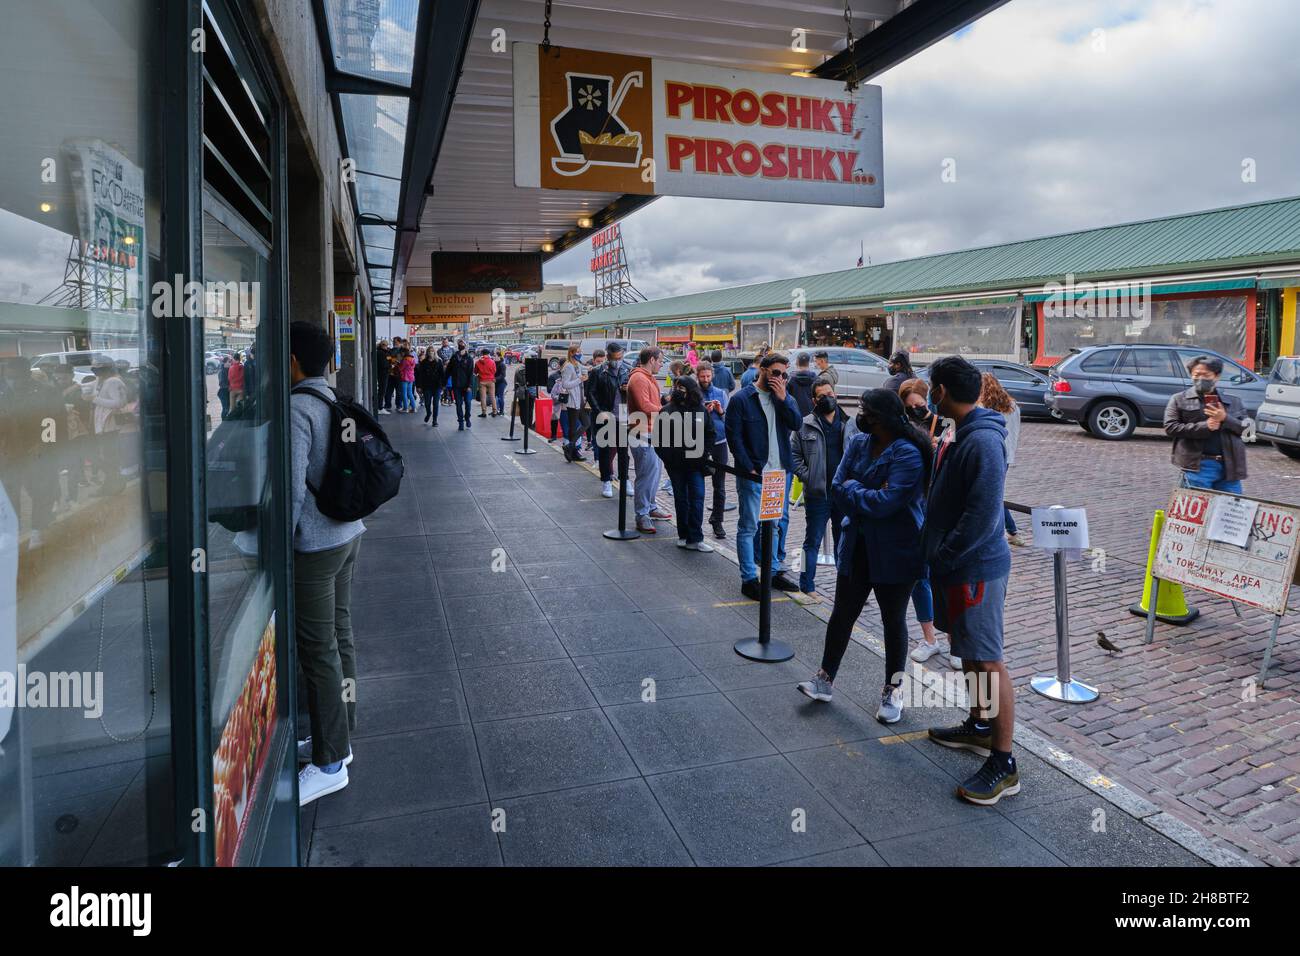 People Stand In Line In Famous Russian Piroshky Bakery near Seattle Pike Place Public Market Stock Photo